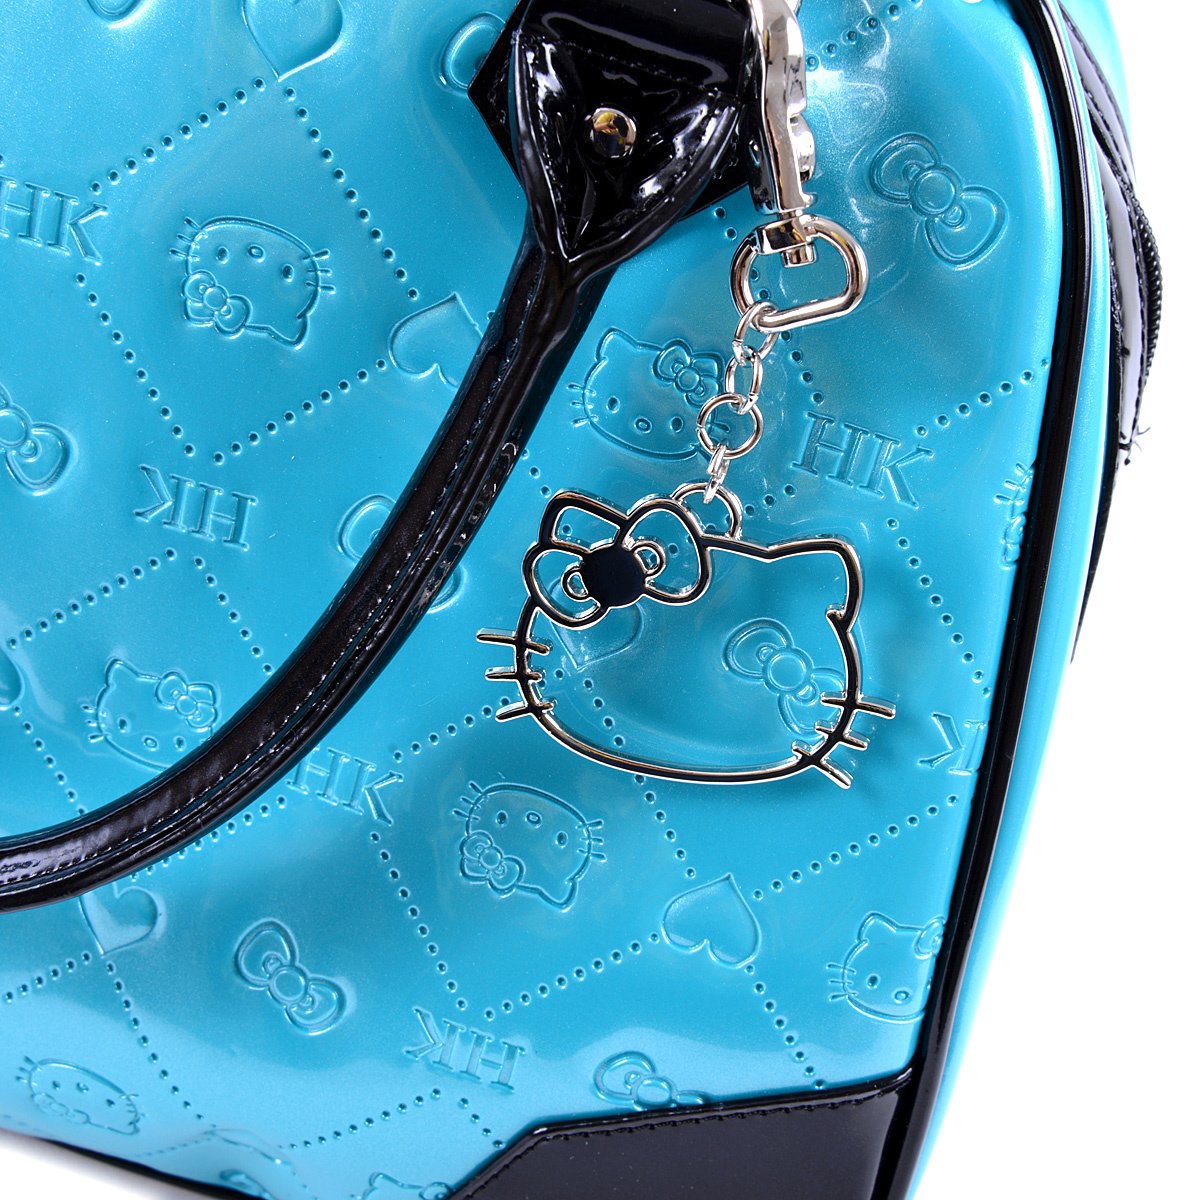 Hello Kitty Teal Embossed Pattern Handbag - Tokyo Otaku Mode (TOM)